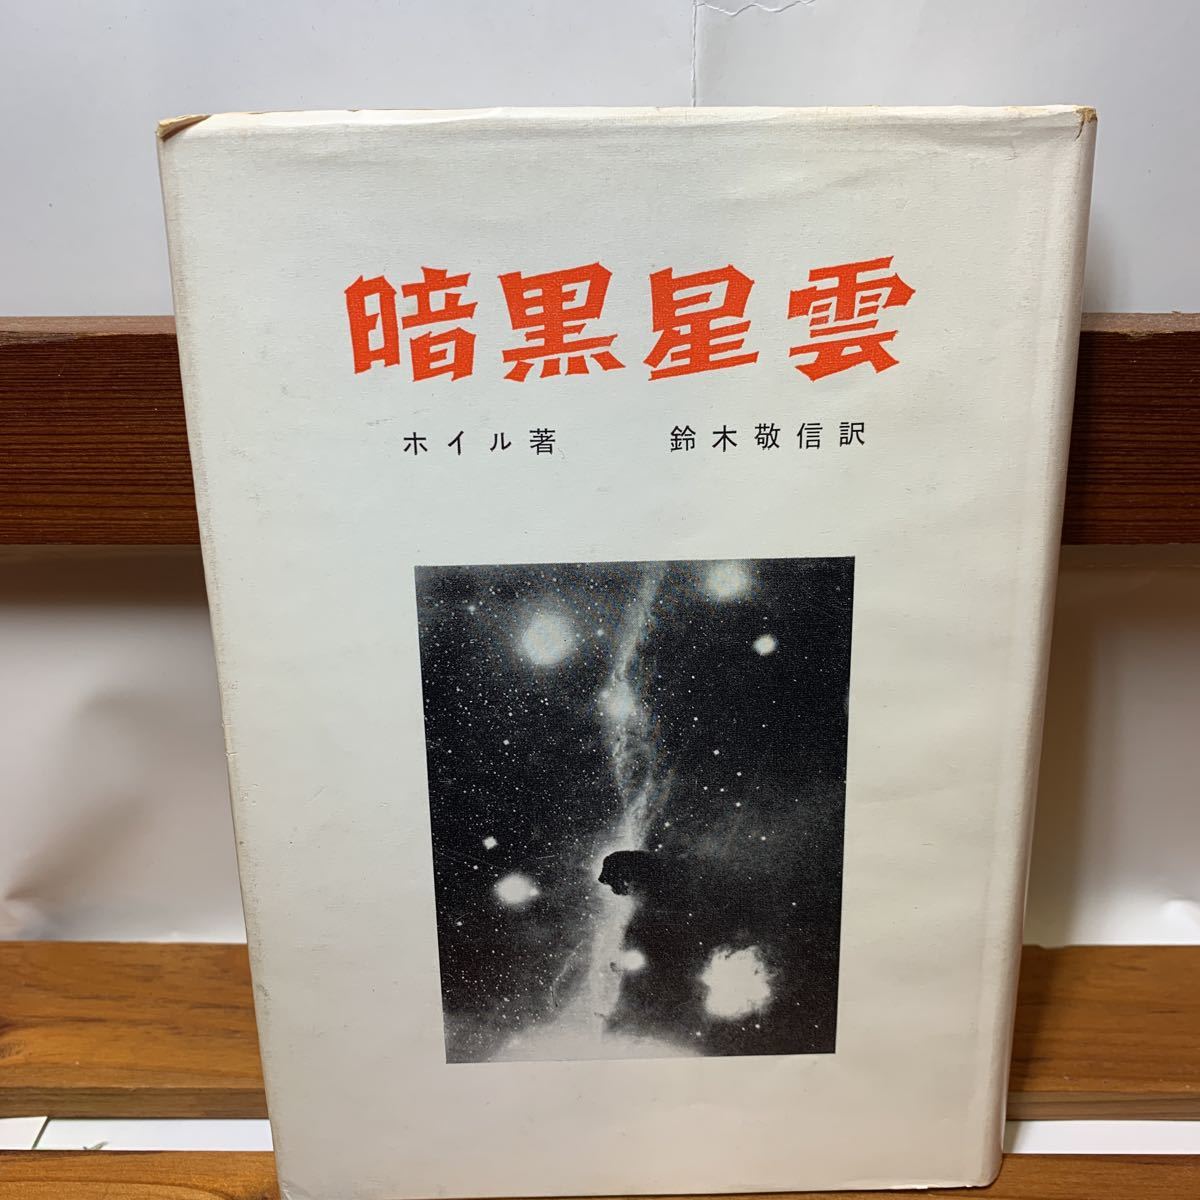 * Osaka Sakai city / receipt possible * darkness star . wheel work Suzuki . confidence / translation law . university publish department Showa era 33 year secondhand book old book *